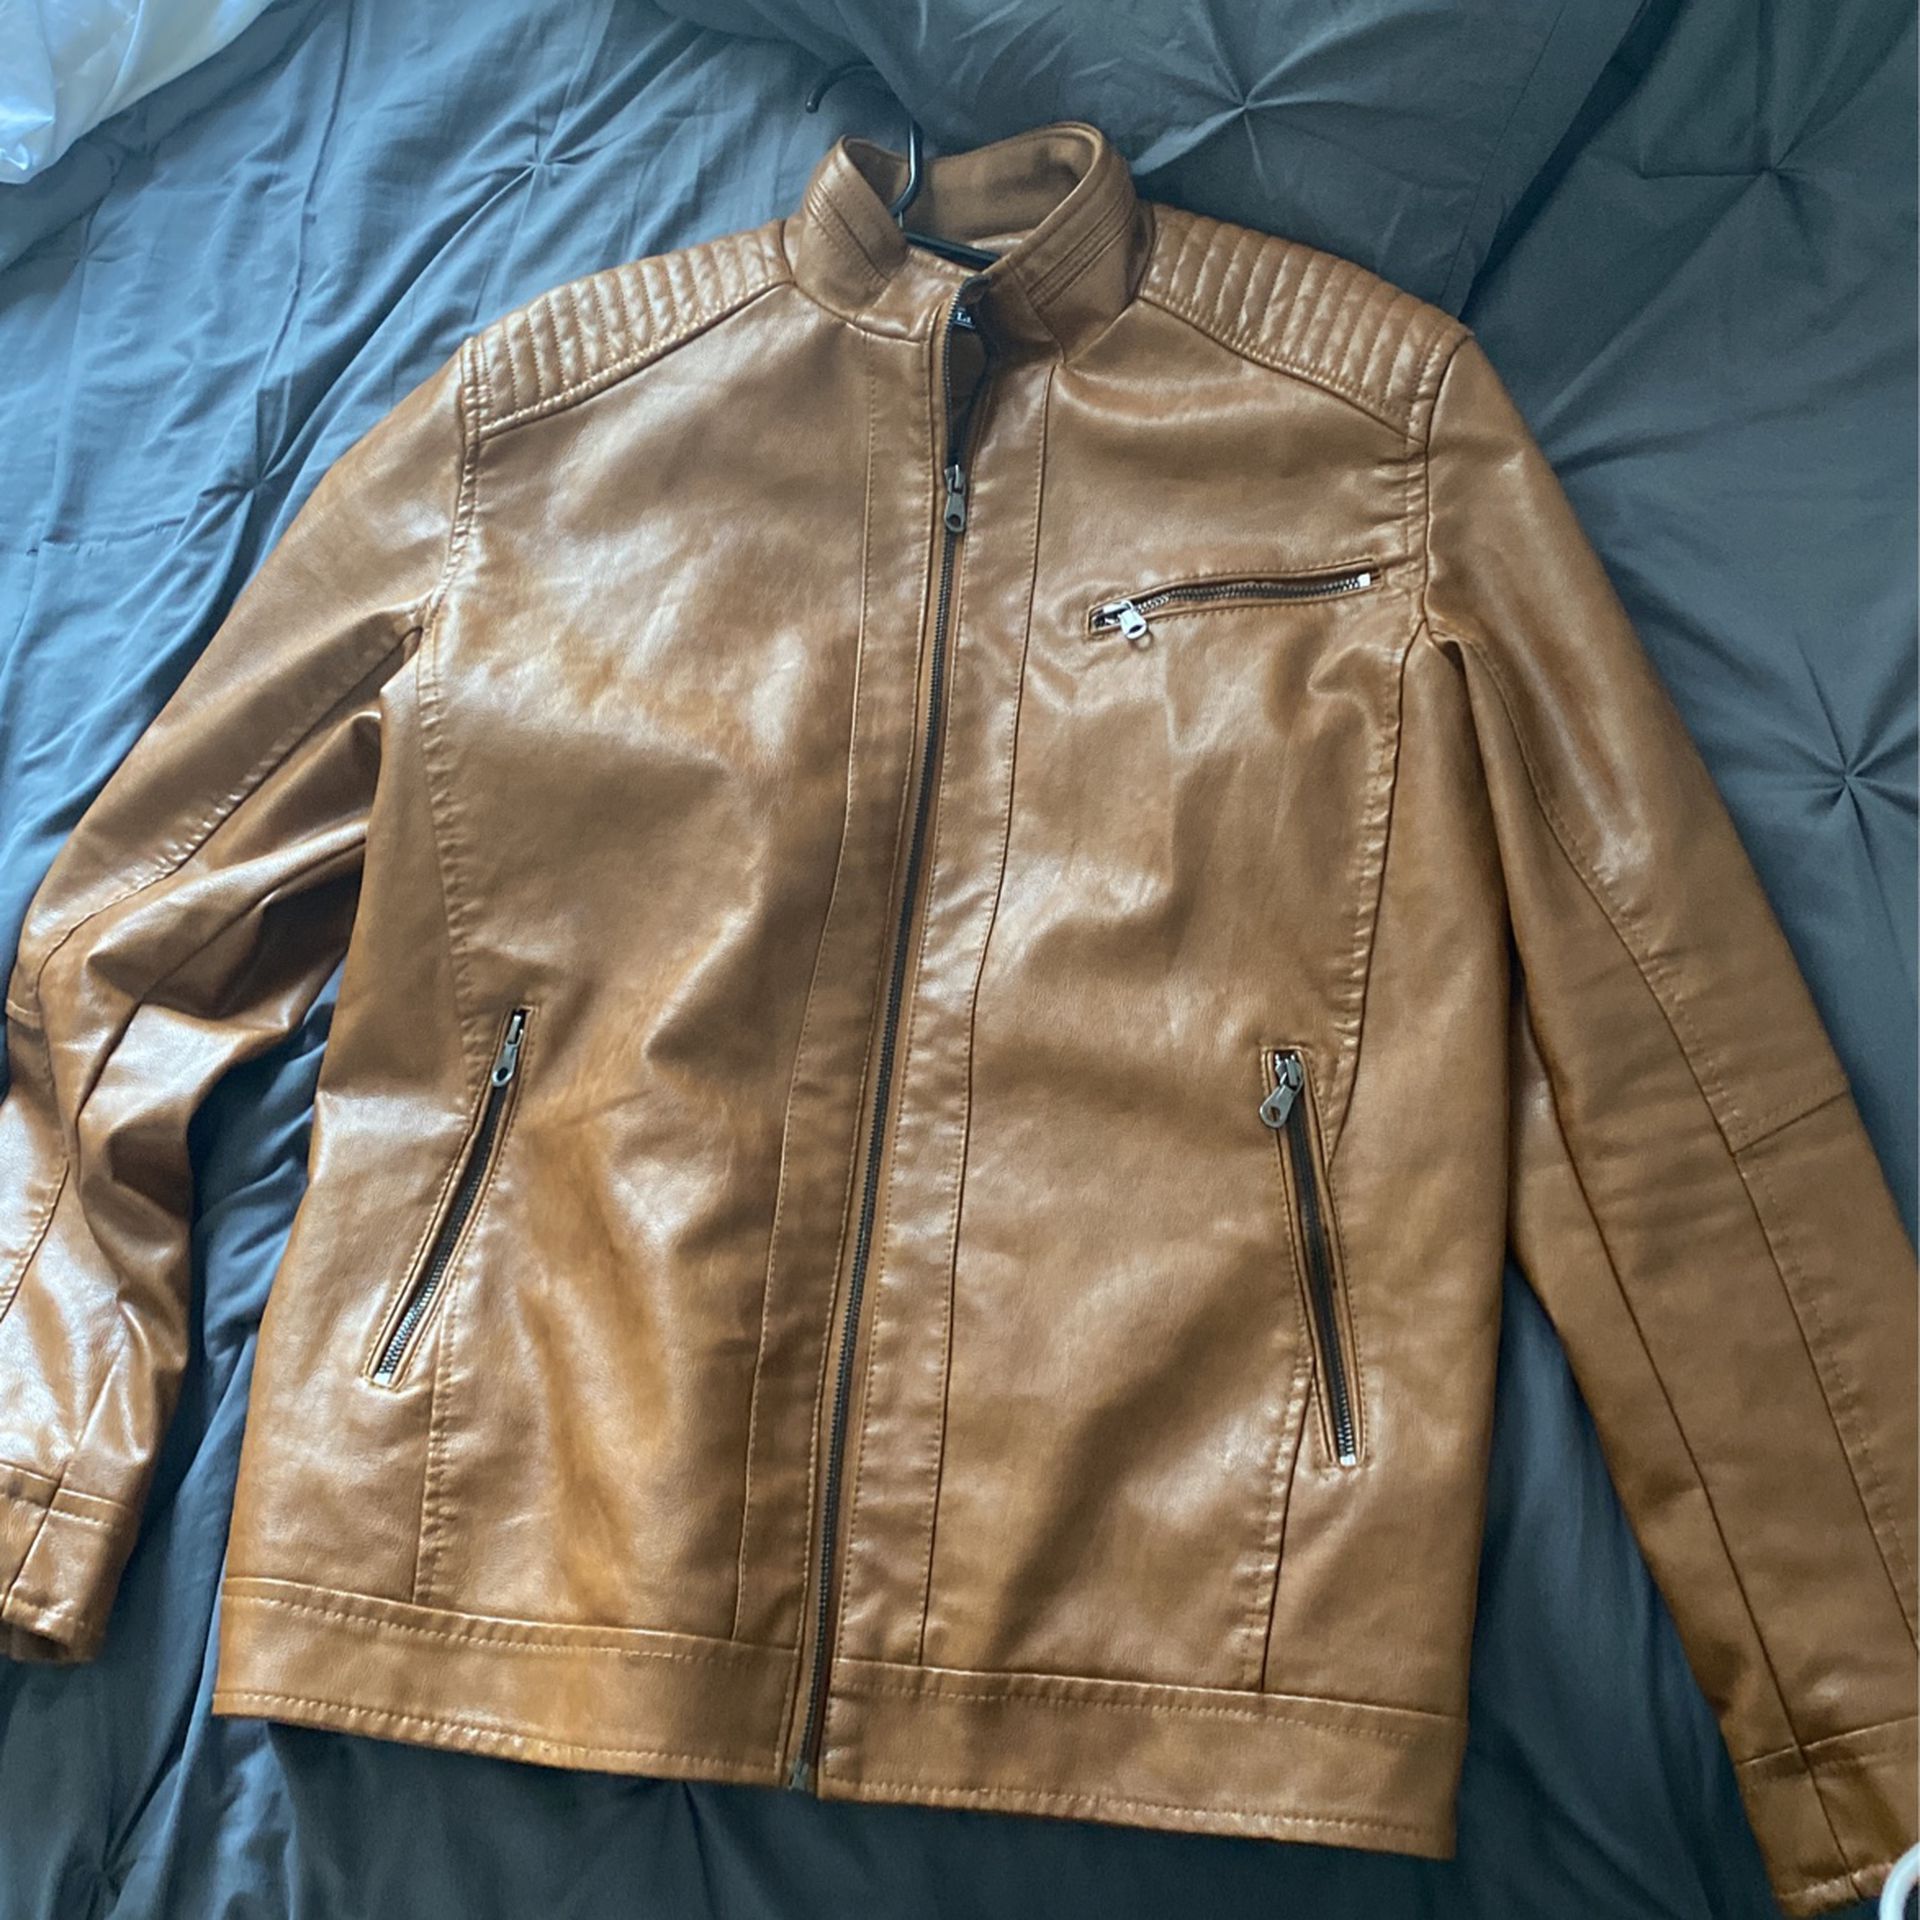 Wulful Leather Jacket Size L for Sale in Glendale, AZ - OfferUp